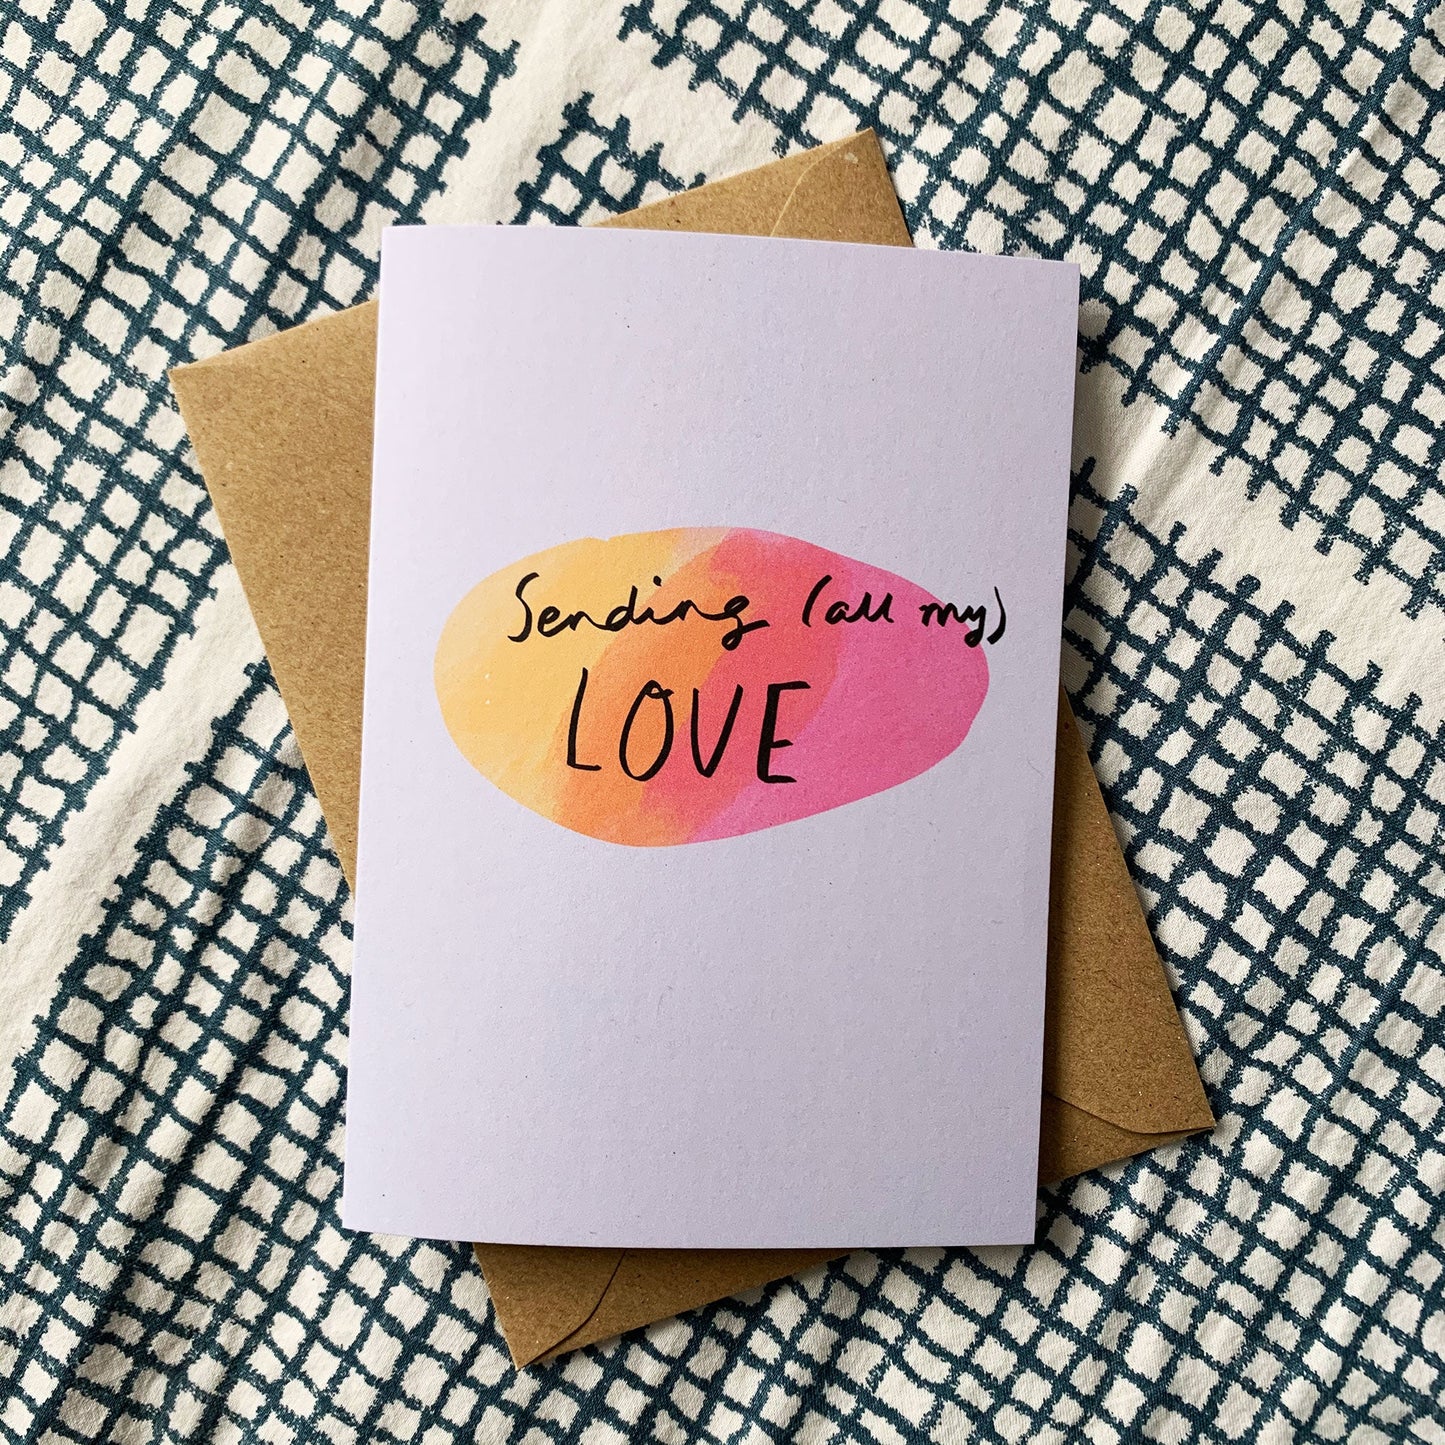 Sending (all my) love card